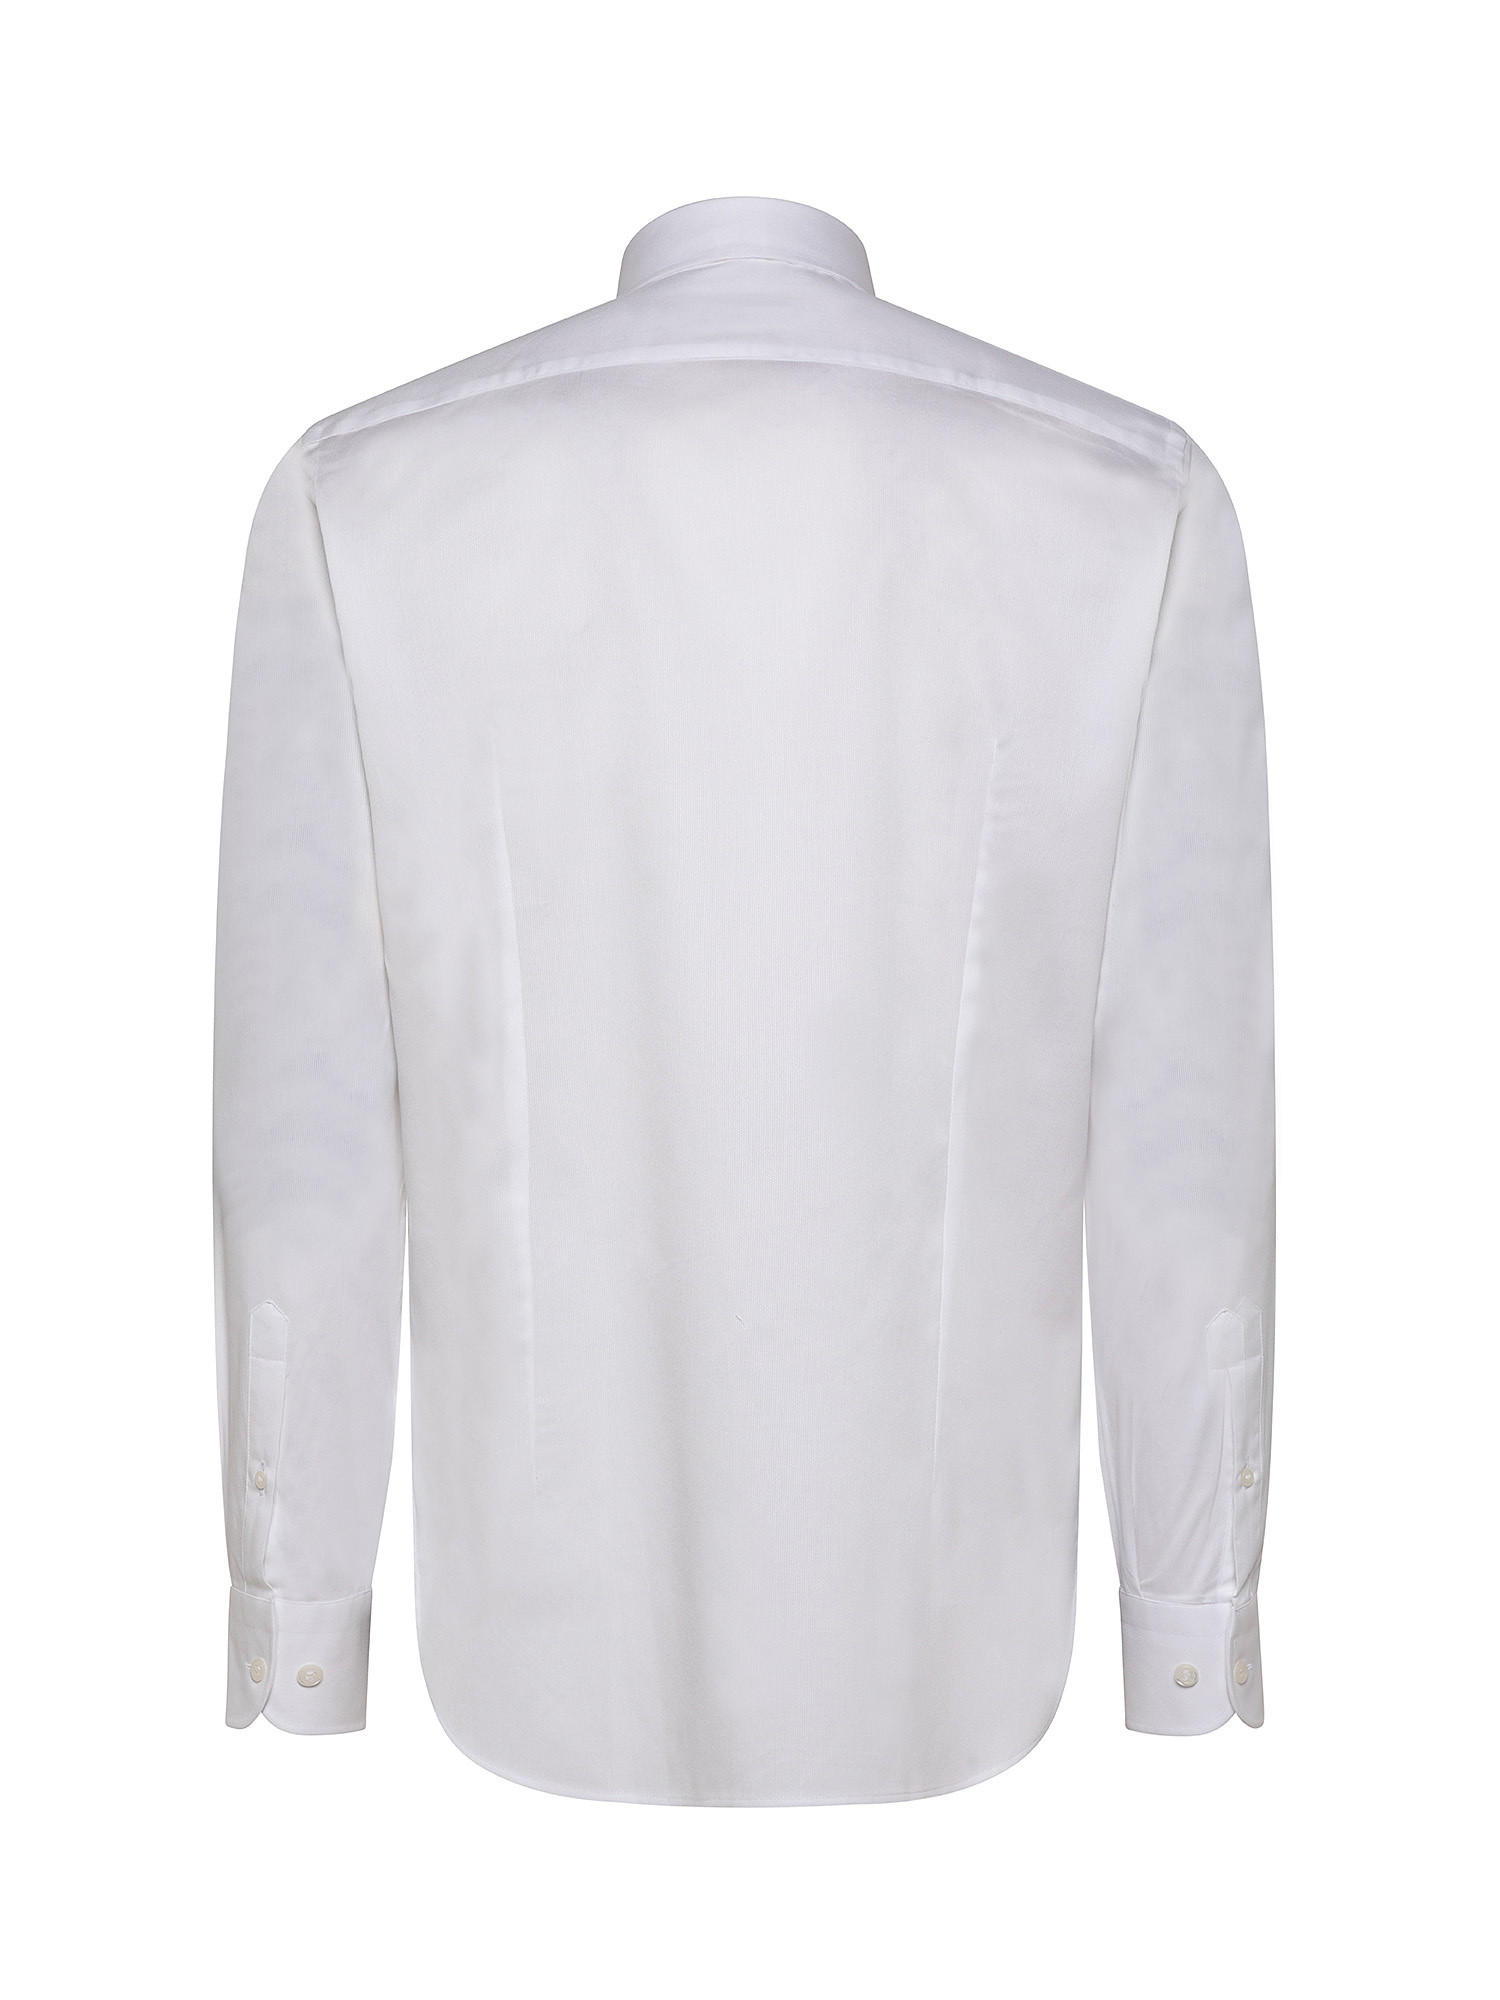 Camicia slim fit cotone armaturato, Bianco, large image number 1